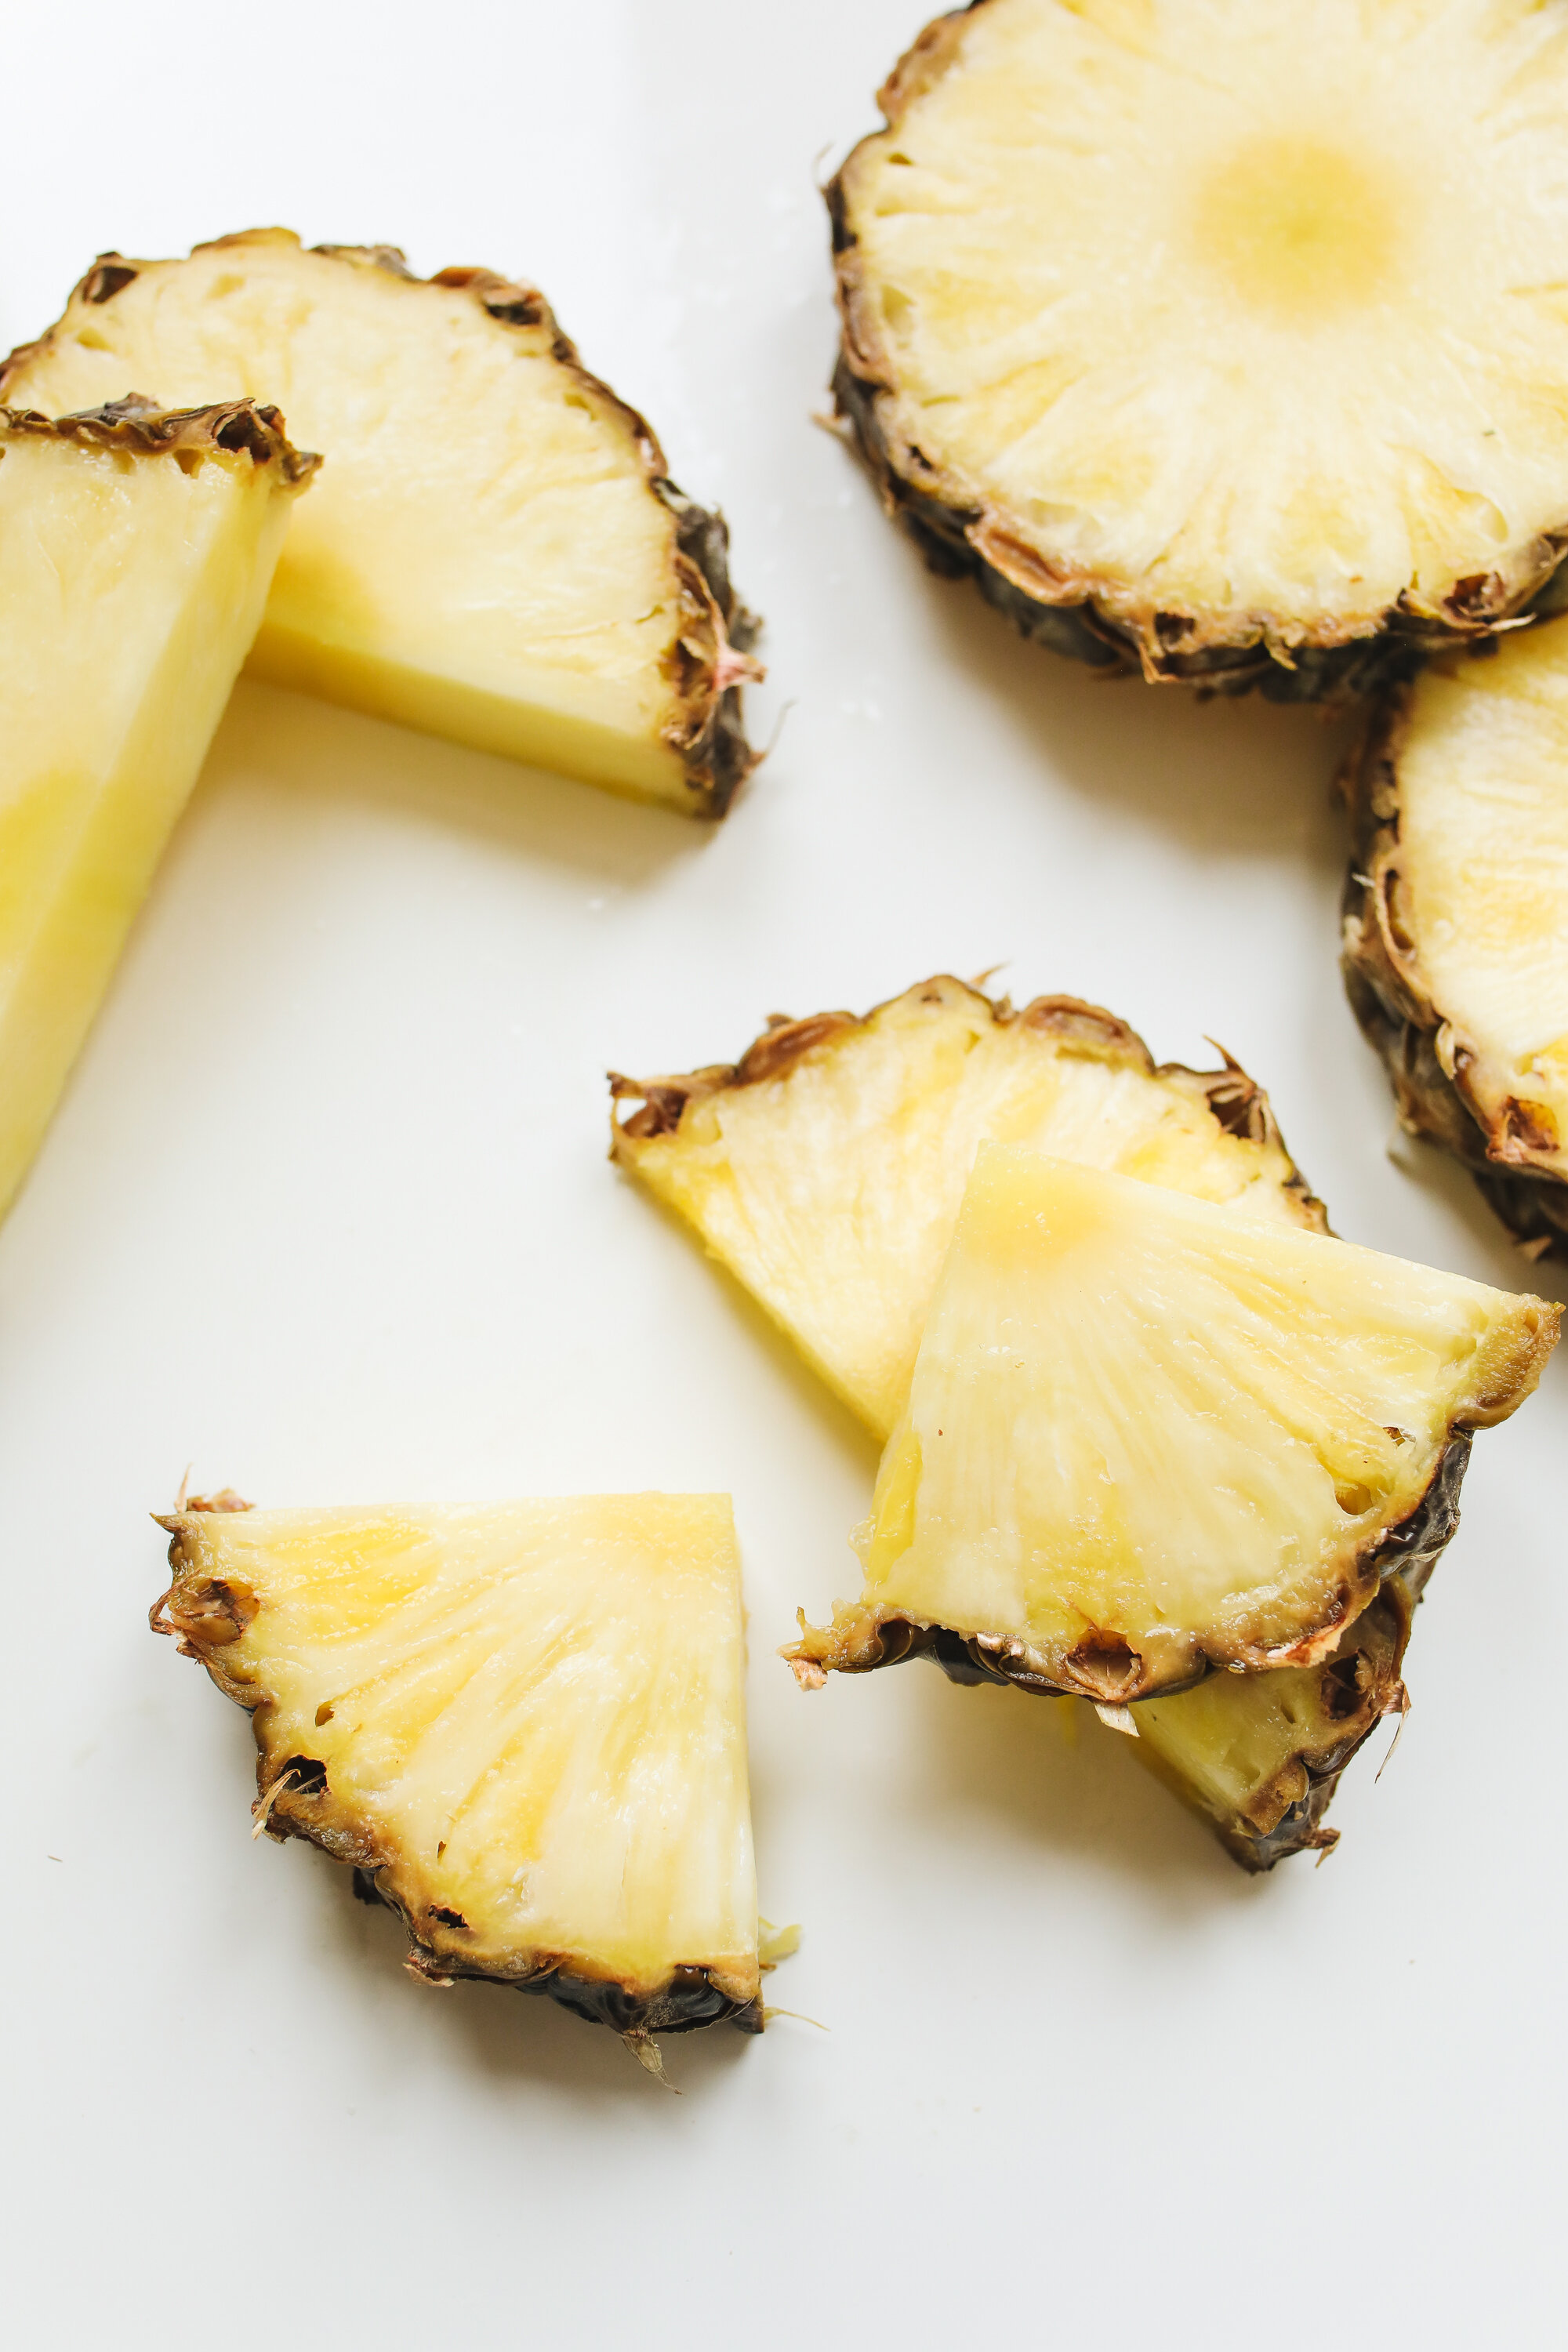 Canva - Photo Of Sliced Pineapple.jpg